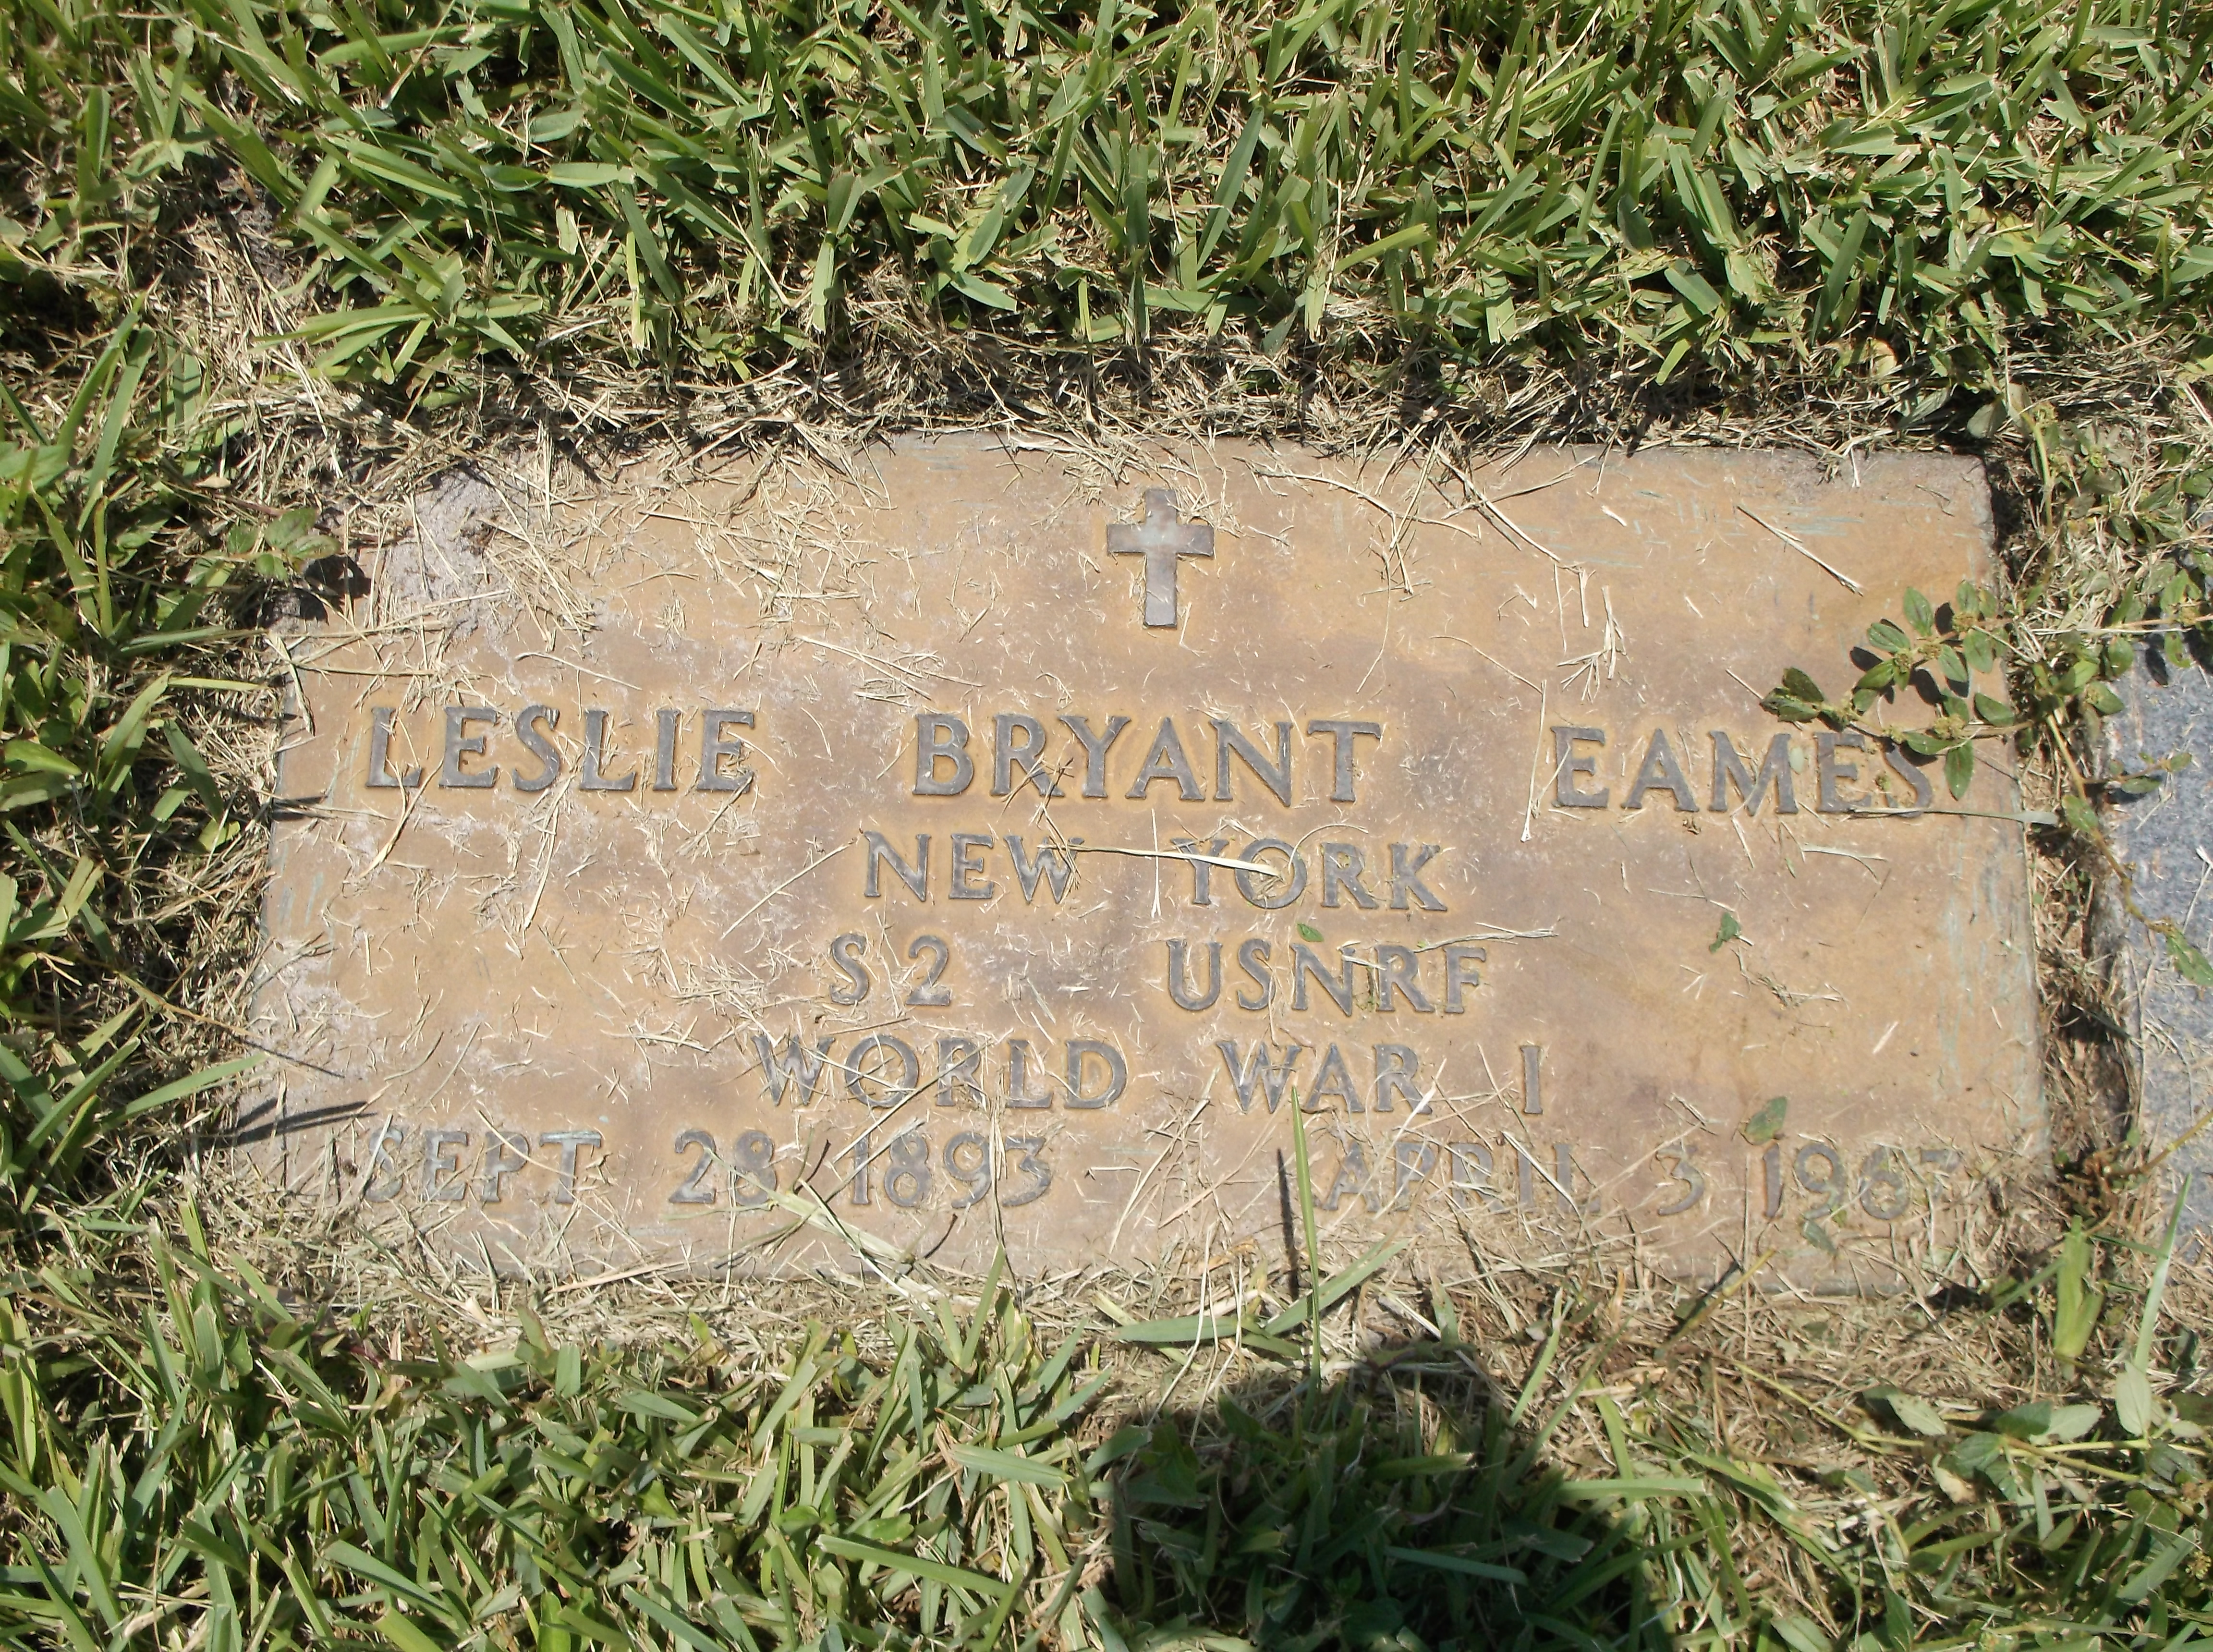 Leslie Bryant Eames